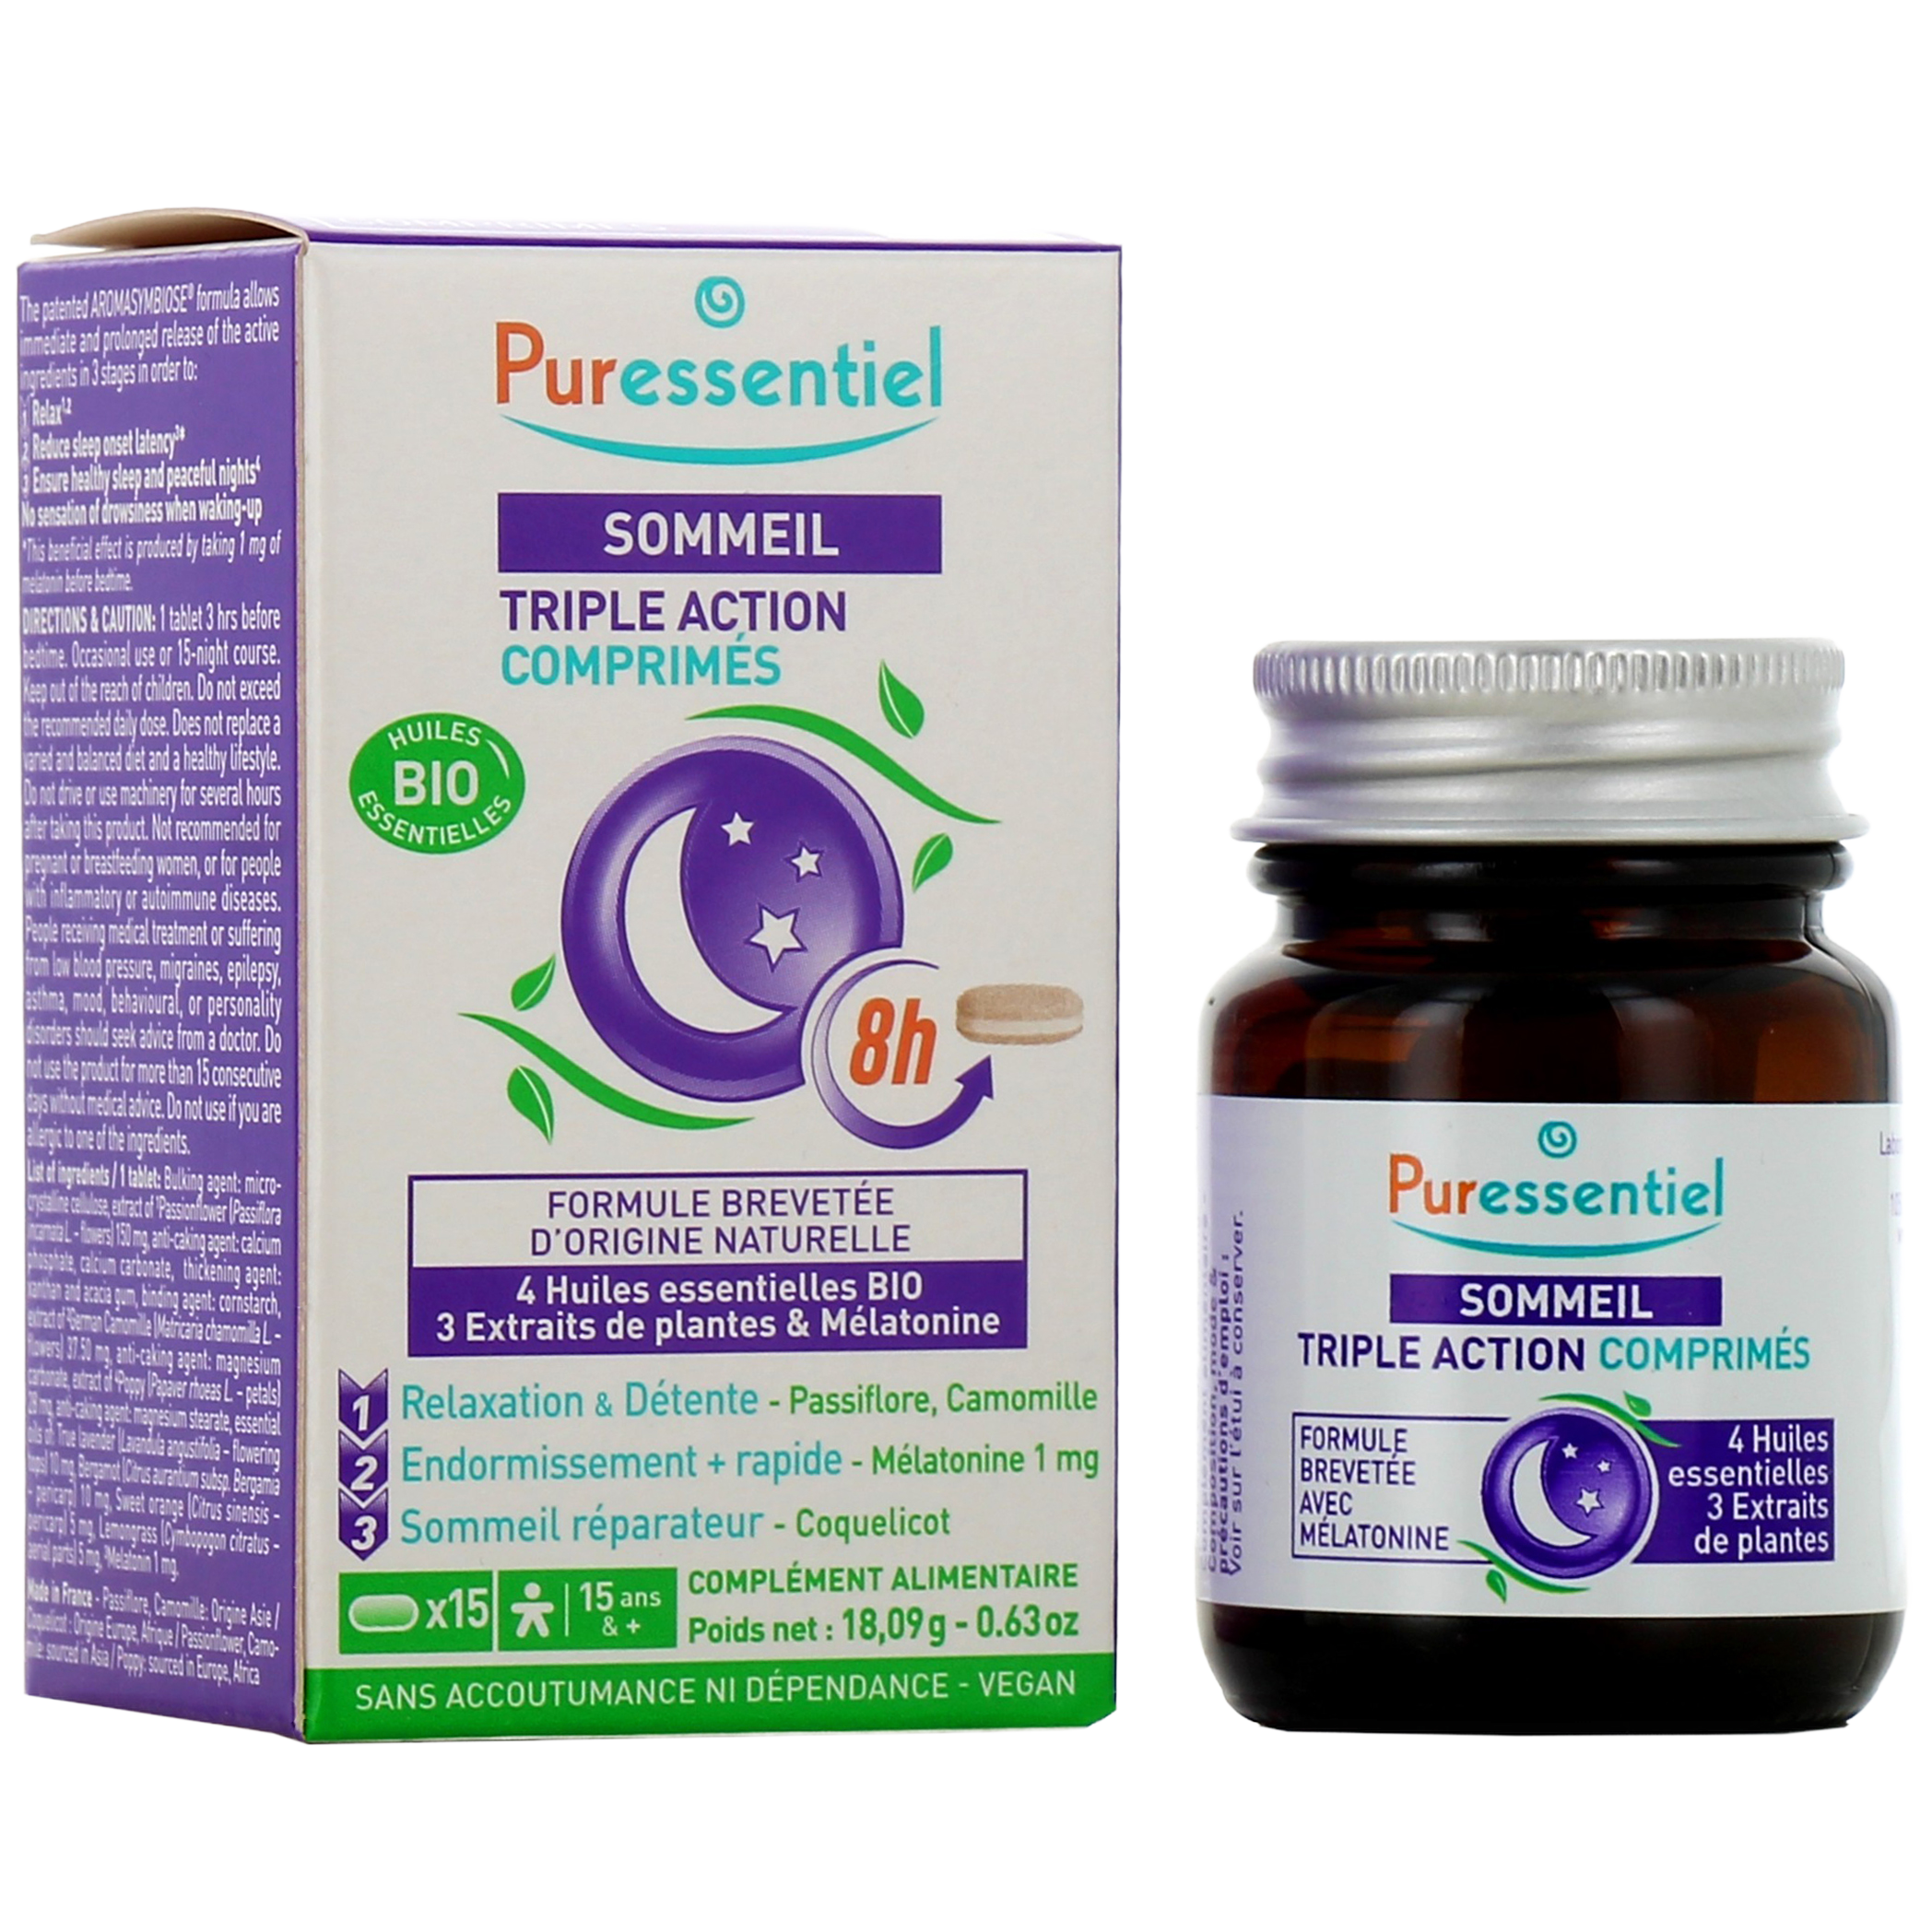 https://cdn.pharmaciedesdrakkars.com/media/images/products/puressentiel-sommeil-triple-action-puressentiel4-1696510478.jpg